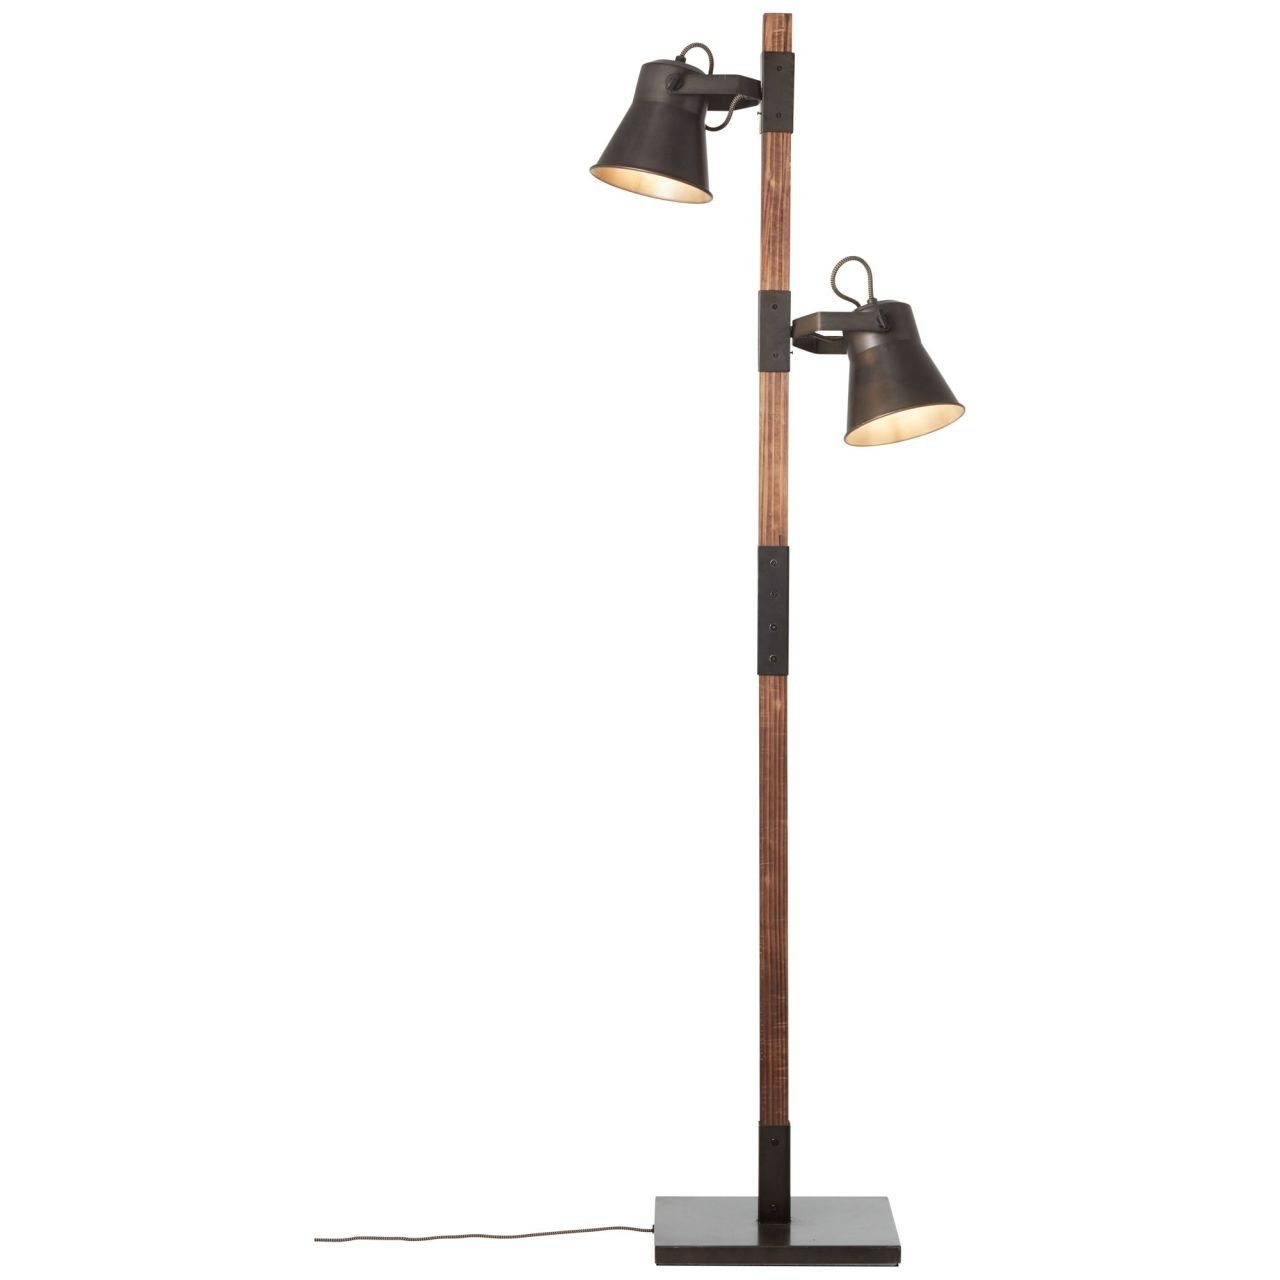 Brilliant Stehlampe Plow, 2x 2flg Lampe Plow schwarz ge 10W, Standleuchte E27, A60, stahl/holz